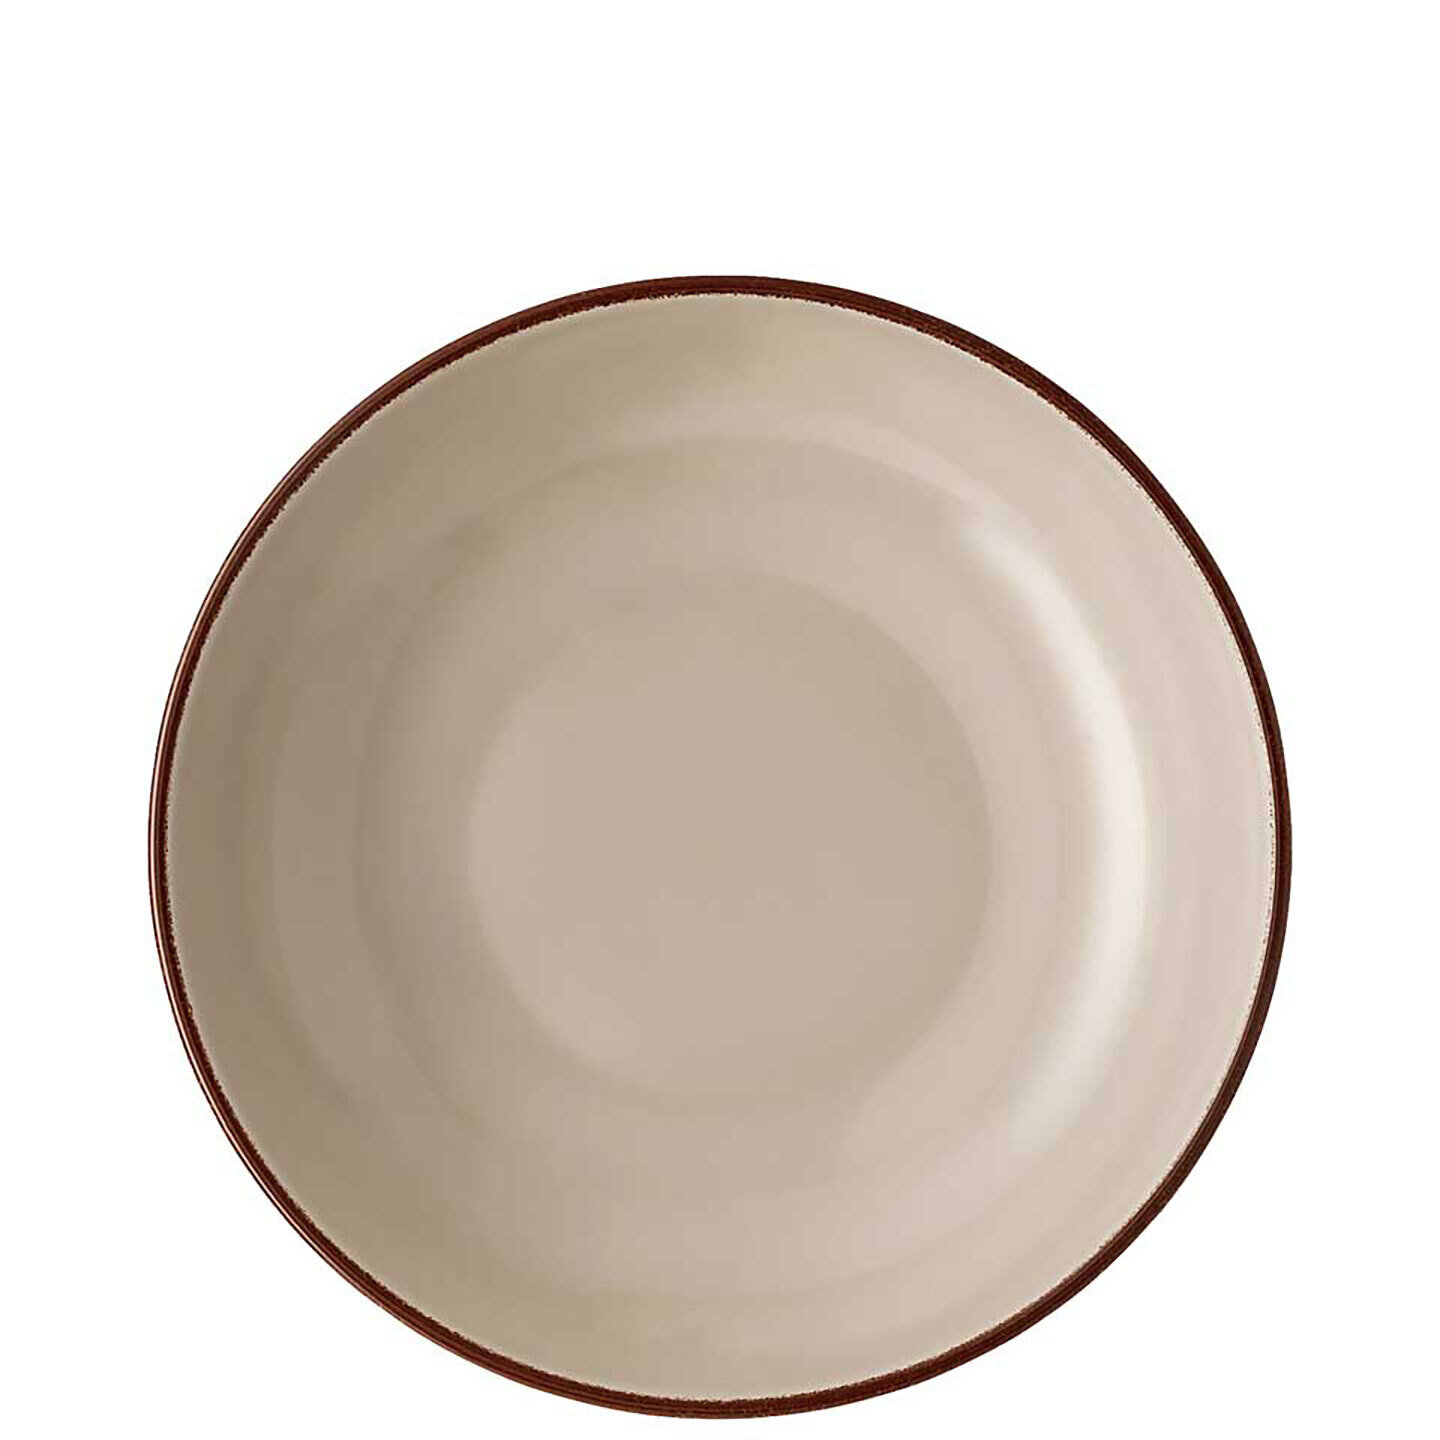 Rosenthal Profi Casual Shell Gourmet Plate Serving Bowl Shallow 10660-405404-31527